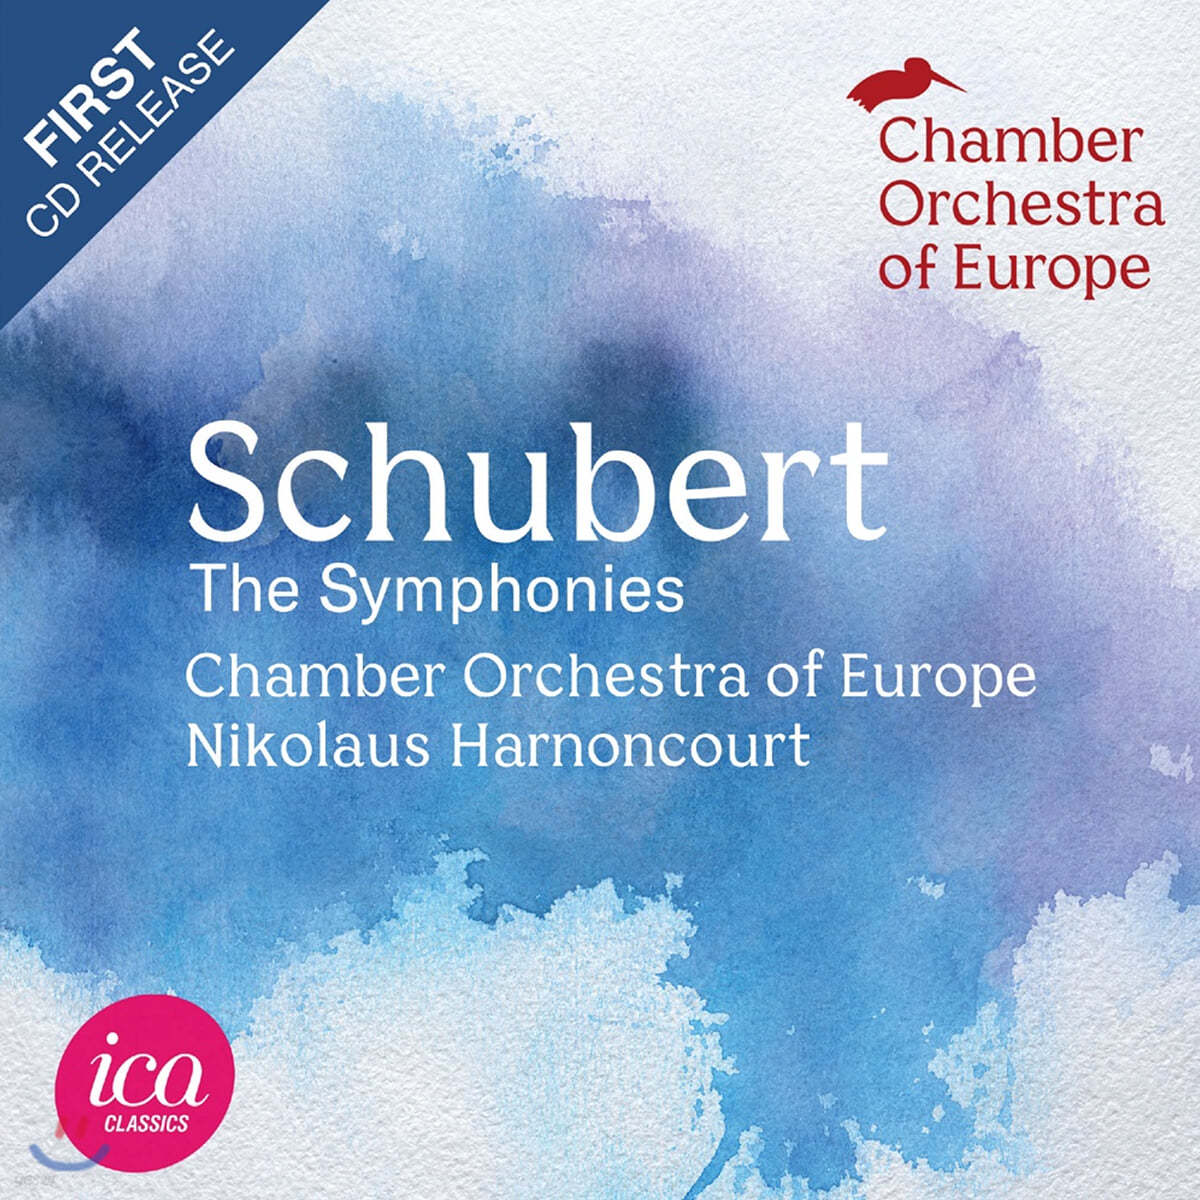 Nikolaus Harnoncourt 슈베르트: 교향곡 전곡 - 니콜라우스 아르농쿠르 (Schubert: The Symphonies) 